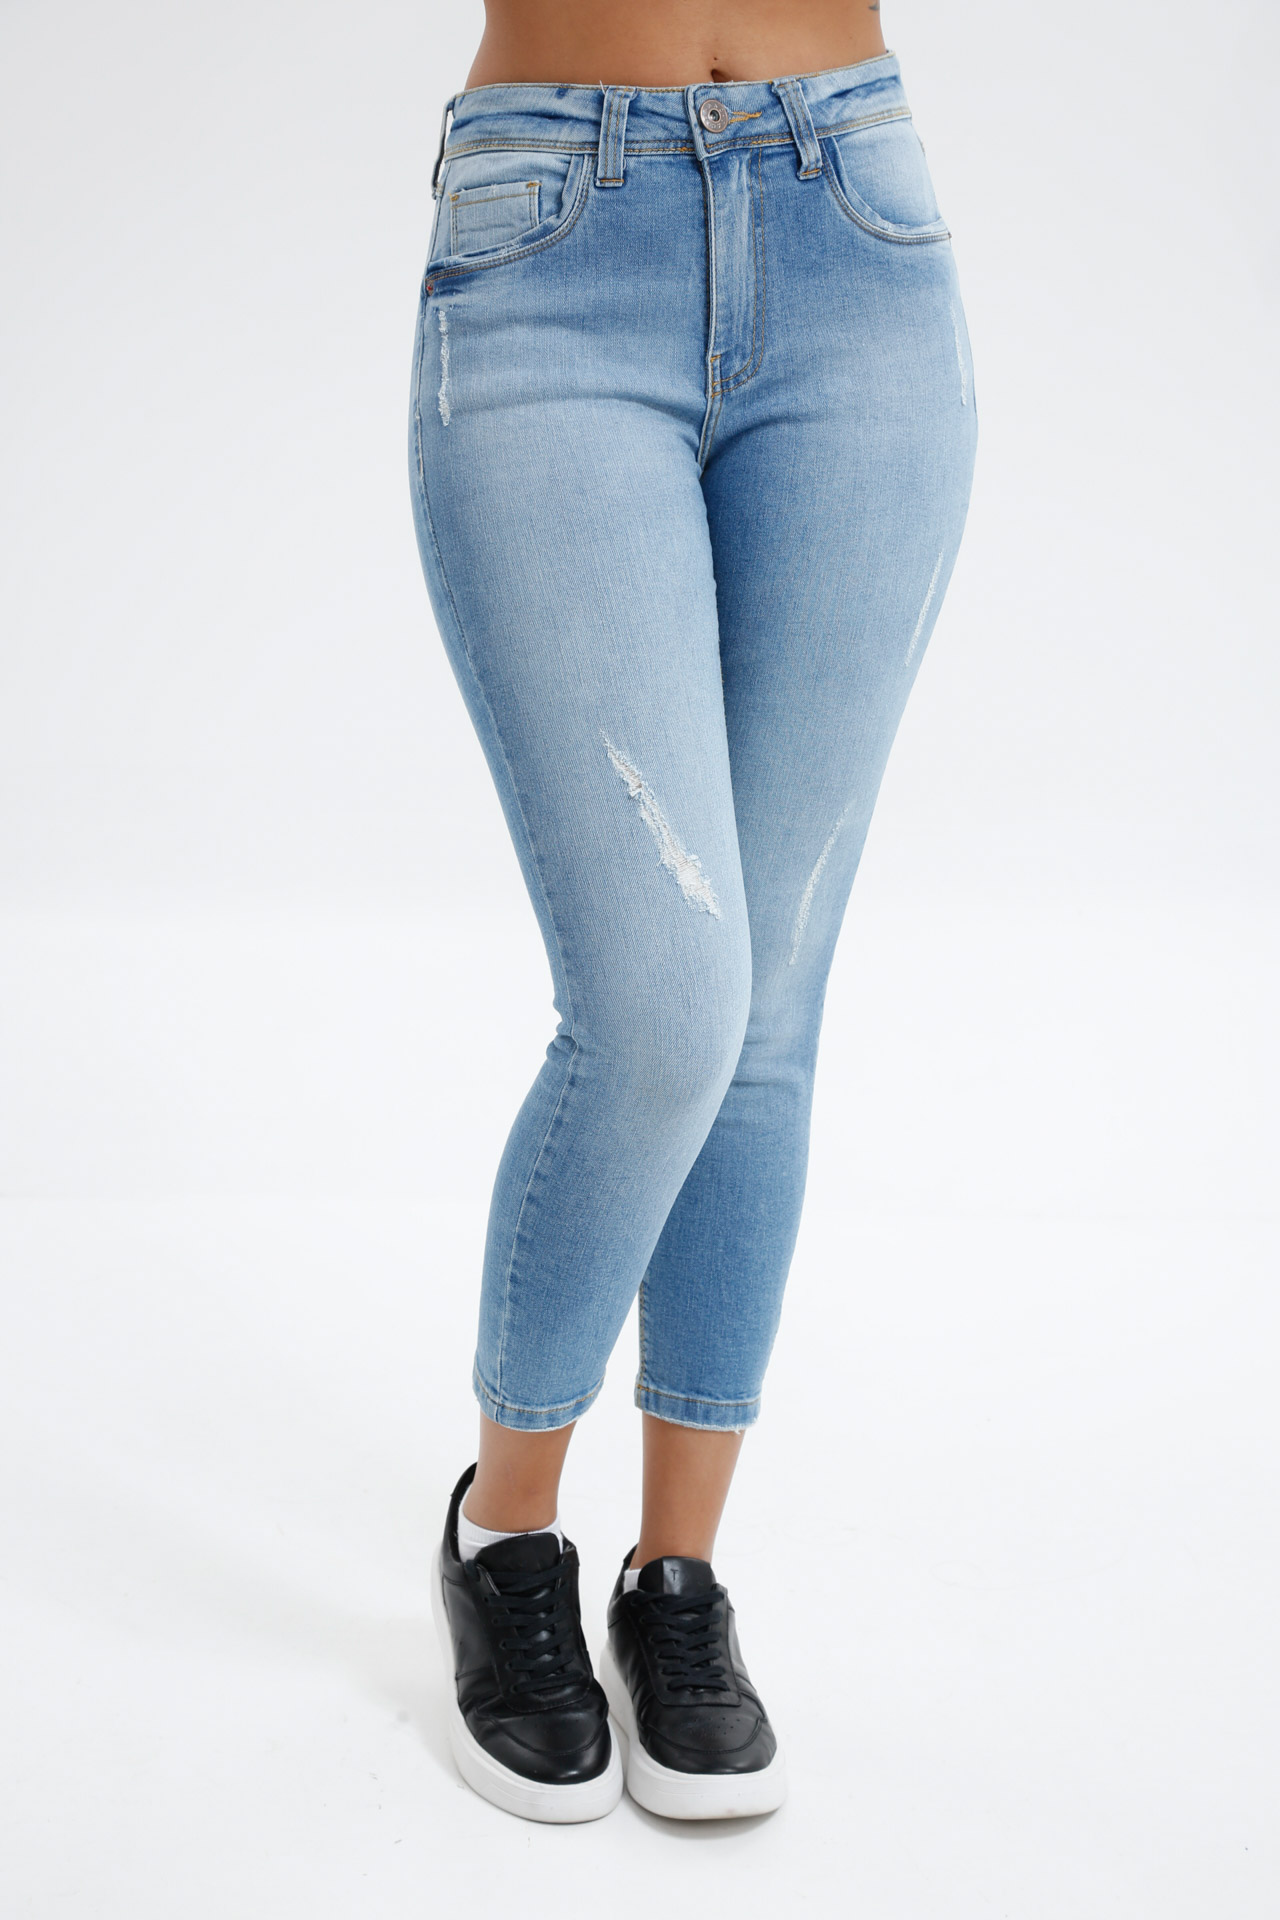 Calça TXC Jeans Feminina Skinny 30062